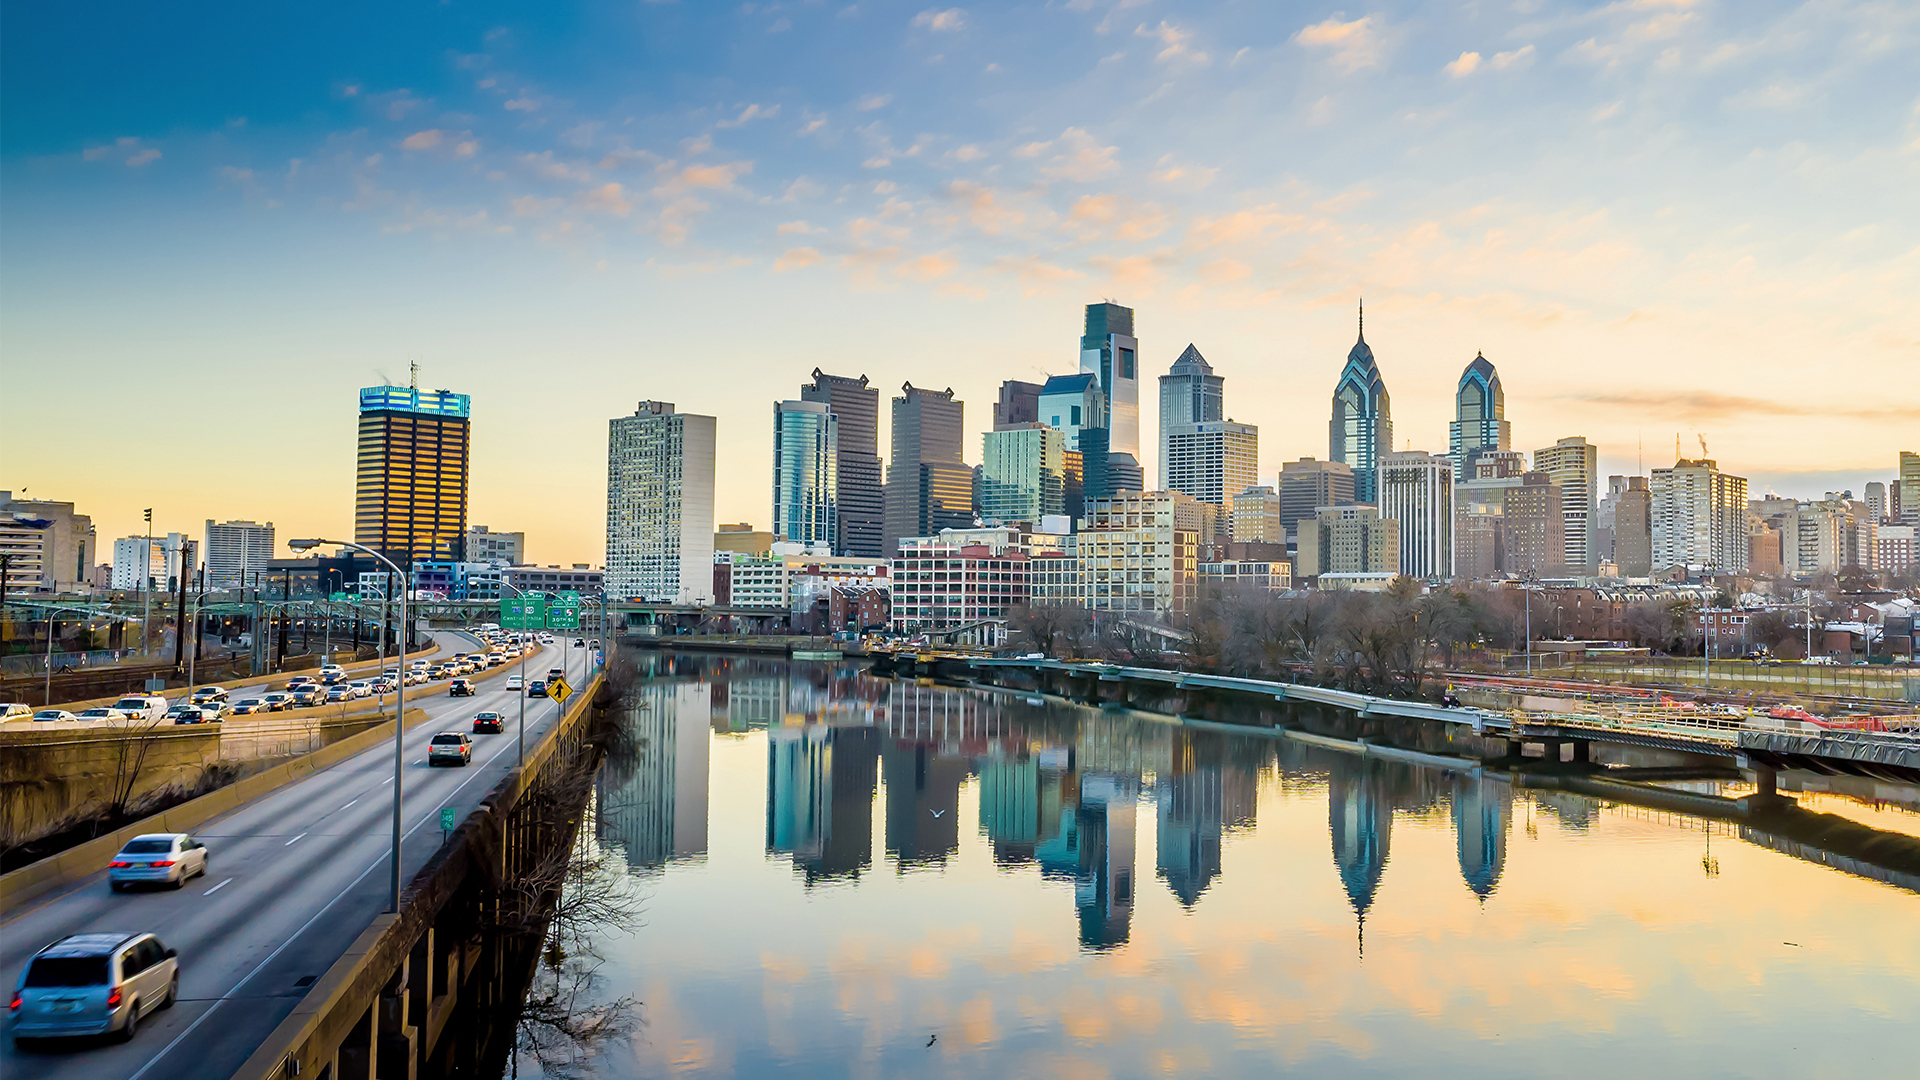 Waterfront Cities of the World - S5E6 - Philadelphia